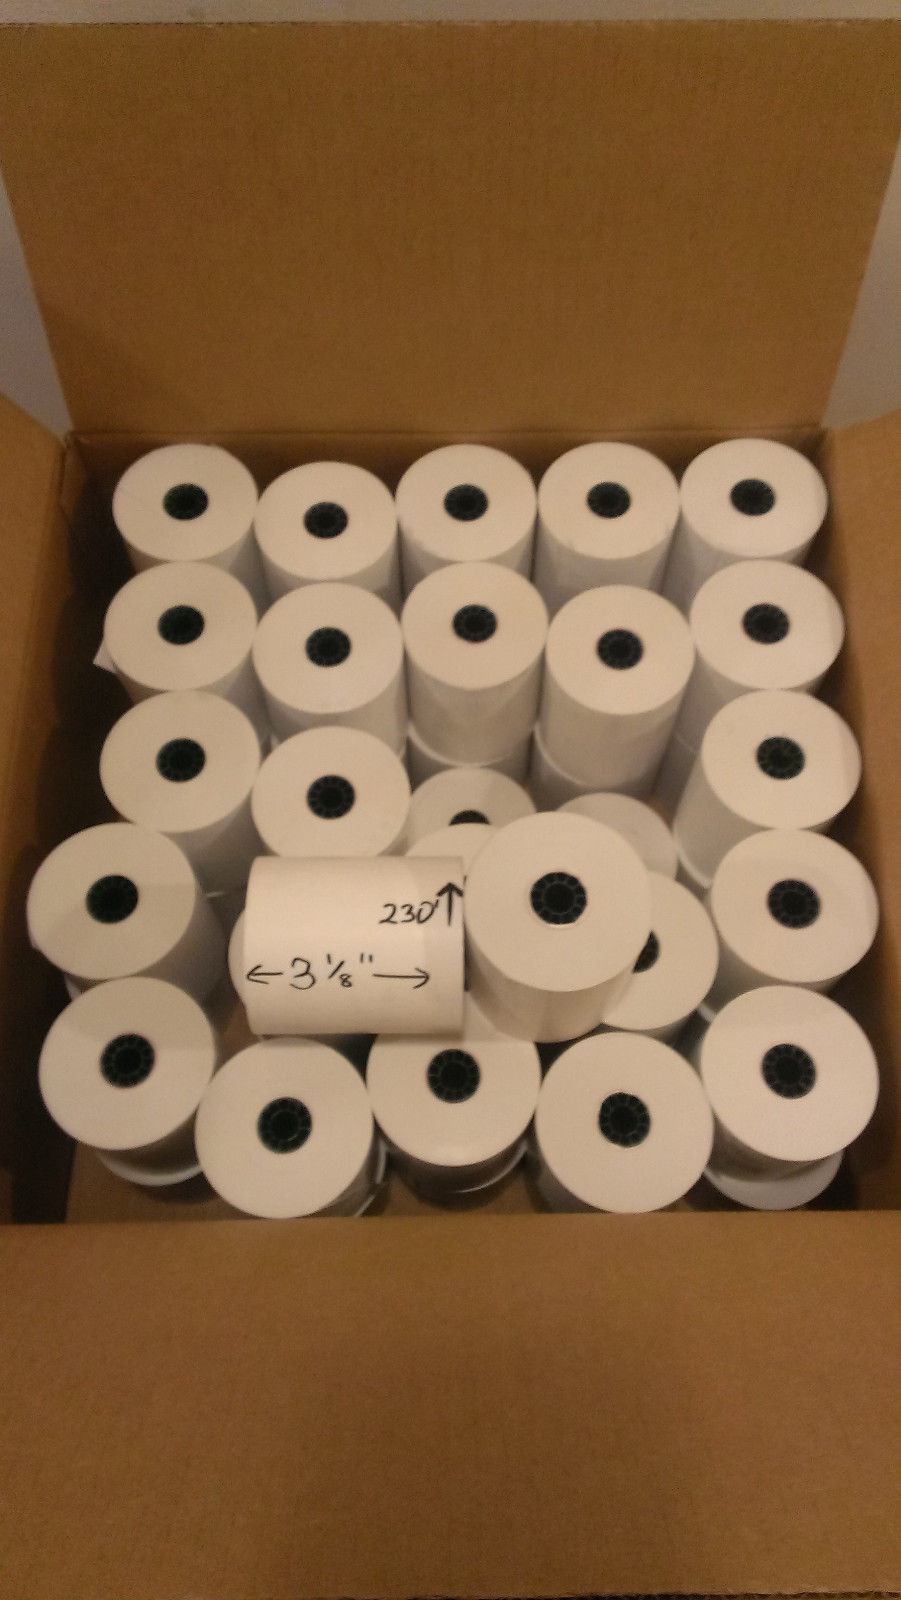 Micros 8700 Paper Rolls